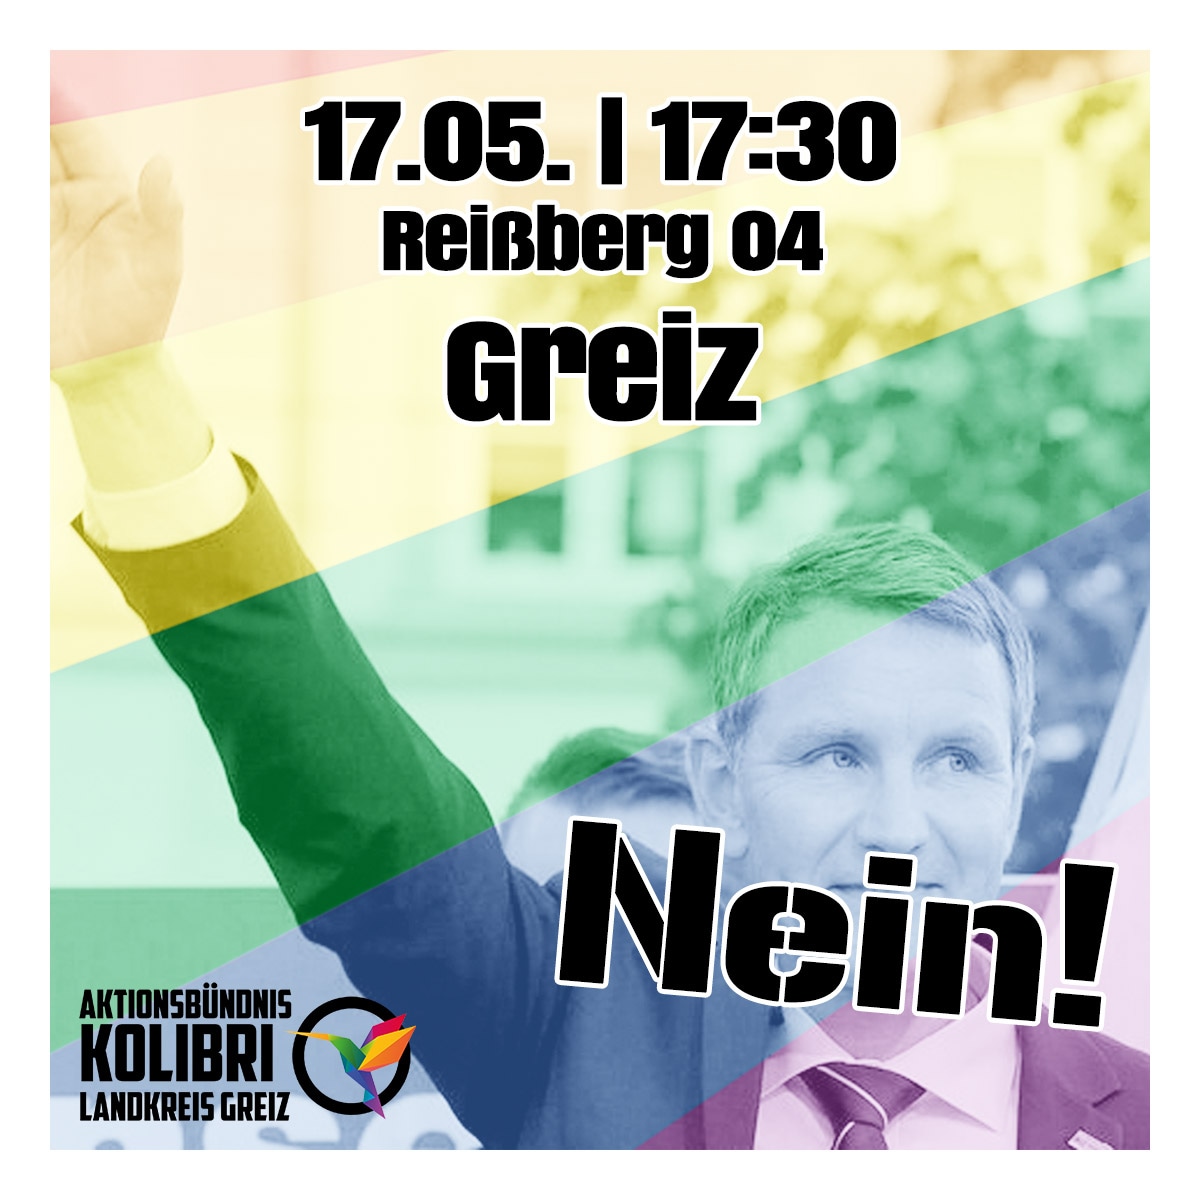 Freitag in #greiz gibt es Protest gegen den #noafd Bürgerdialog mit Faschist Höcke. 17.05. ab 17:30 Nähe Reißberg 04, Uhland-Straße.
#kolibri #nonazis #noafd #zeulenroda #weida #vogtland